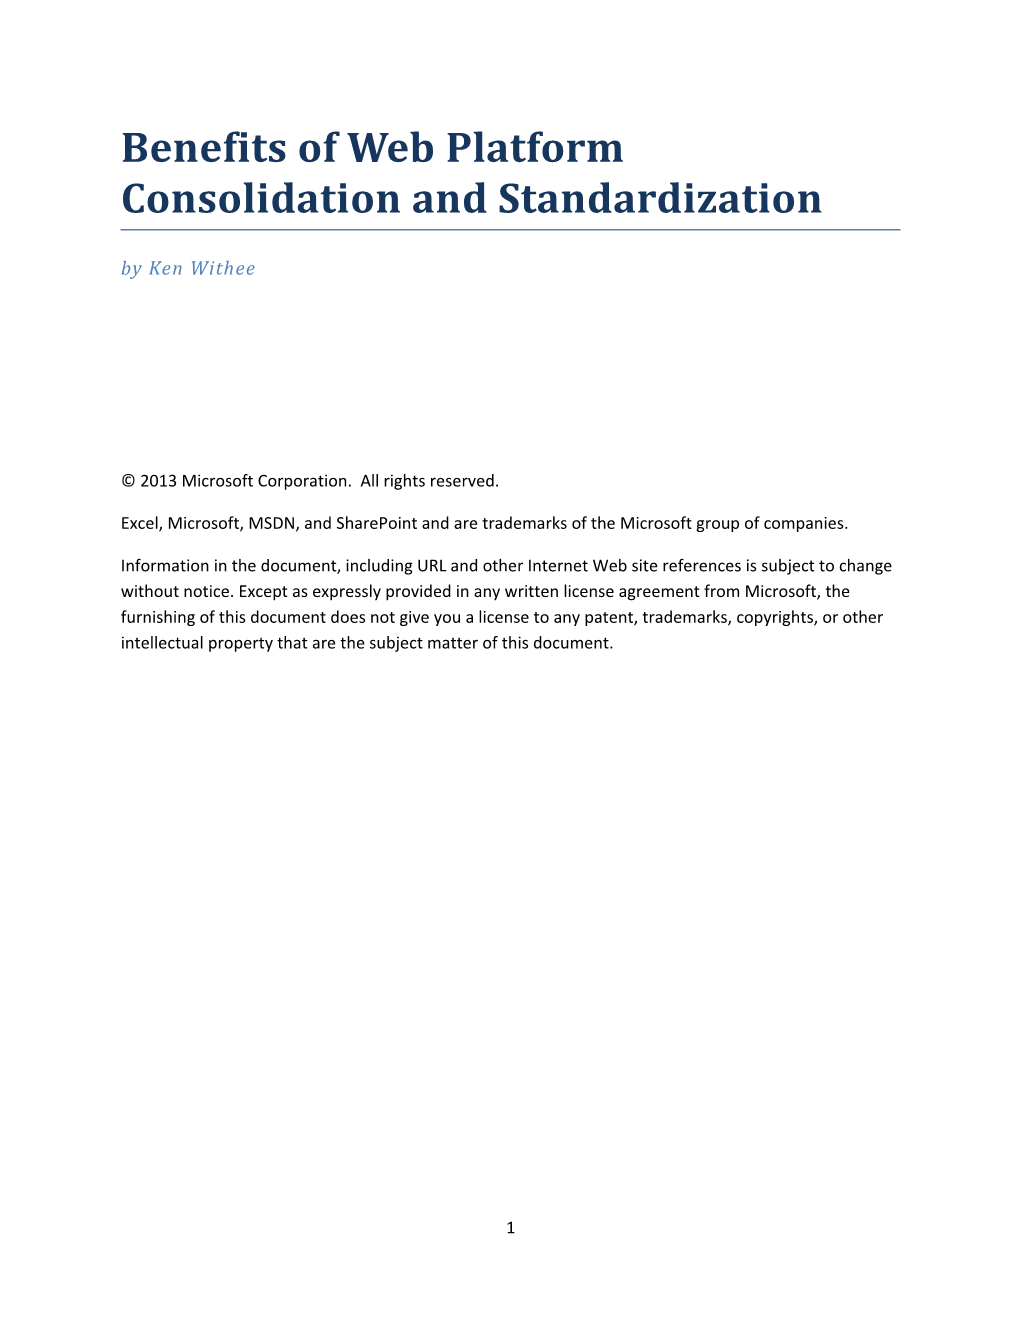 Benefits of Web Platform Consolidation and Standardization